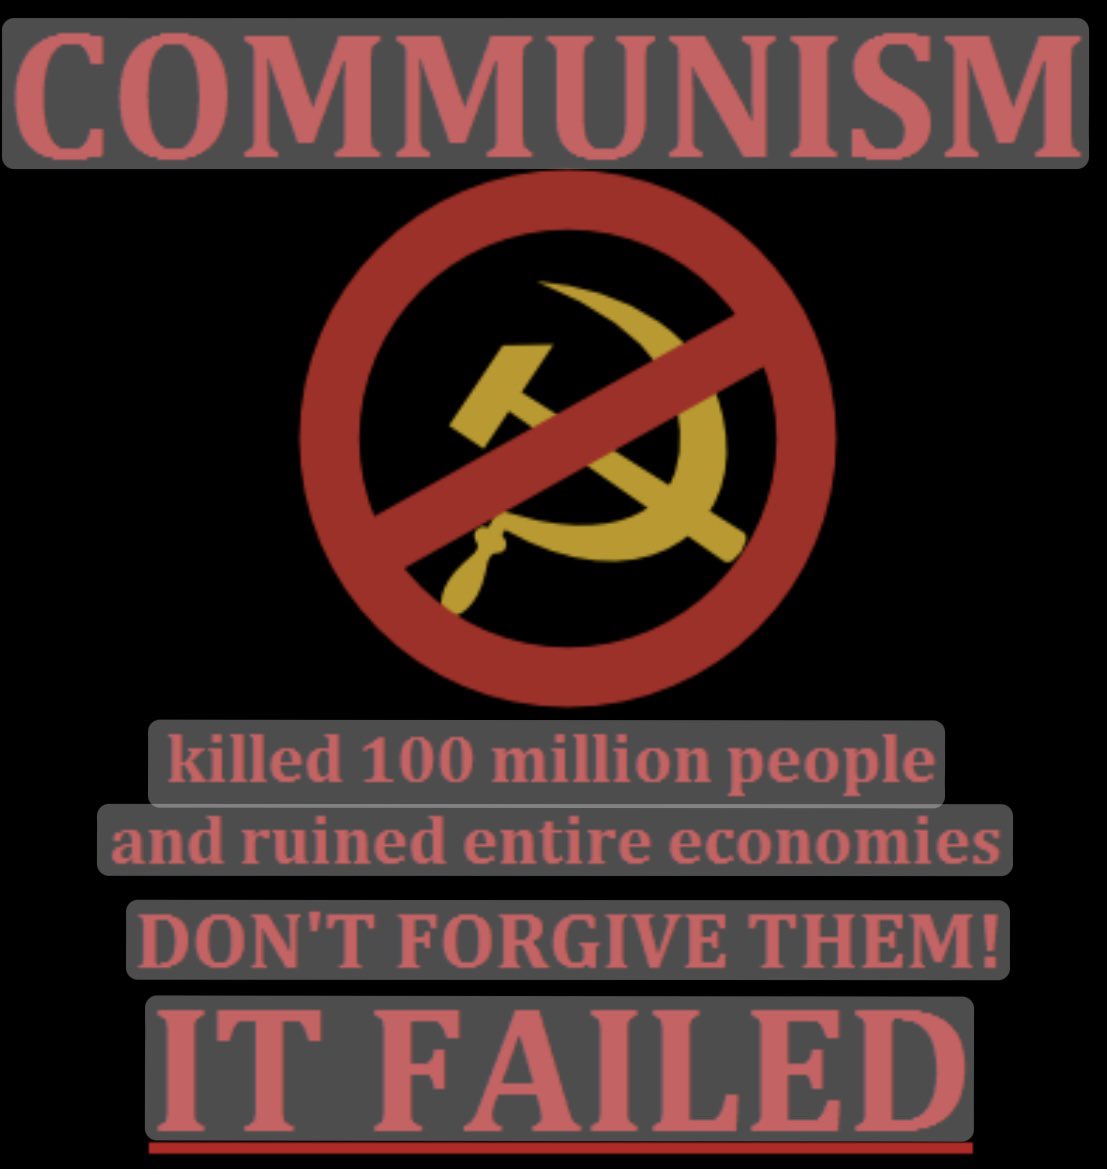 #StandUp #AmericaFirst
#AntiCommunism #AntiCommunist #Genocide #Tyranny #Totalitarianism #FuckMarx